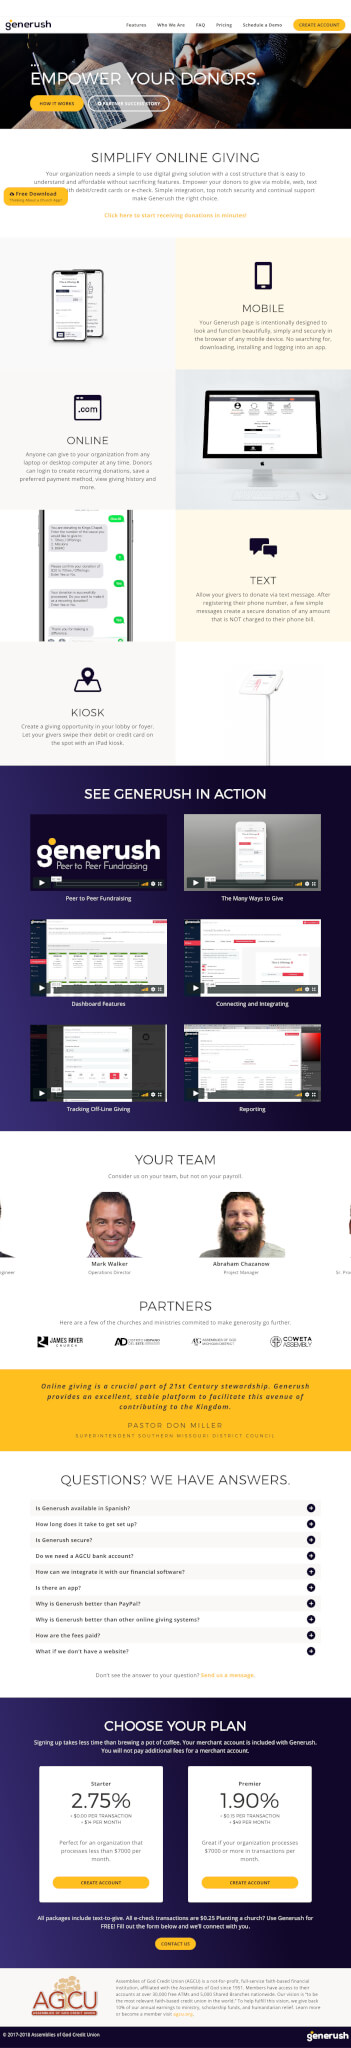 generush.org home page design